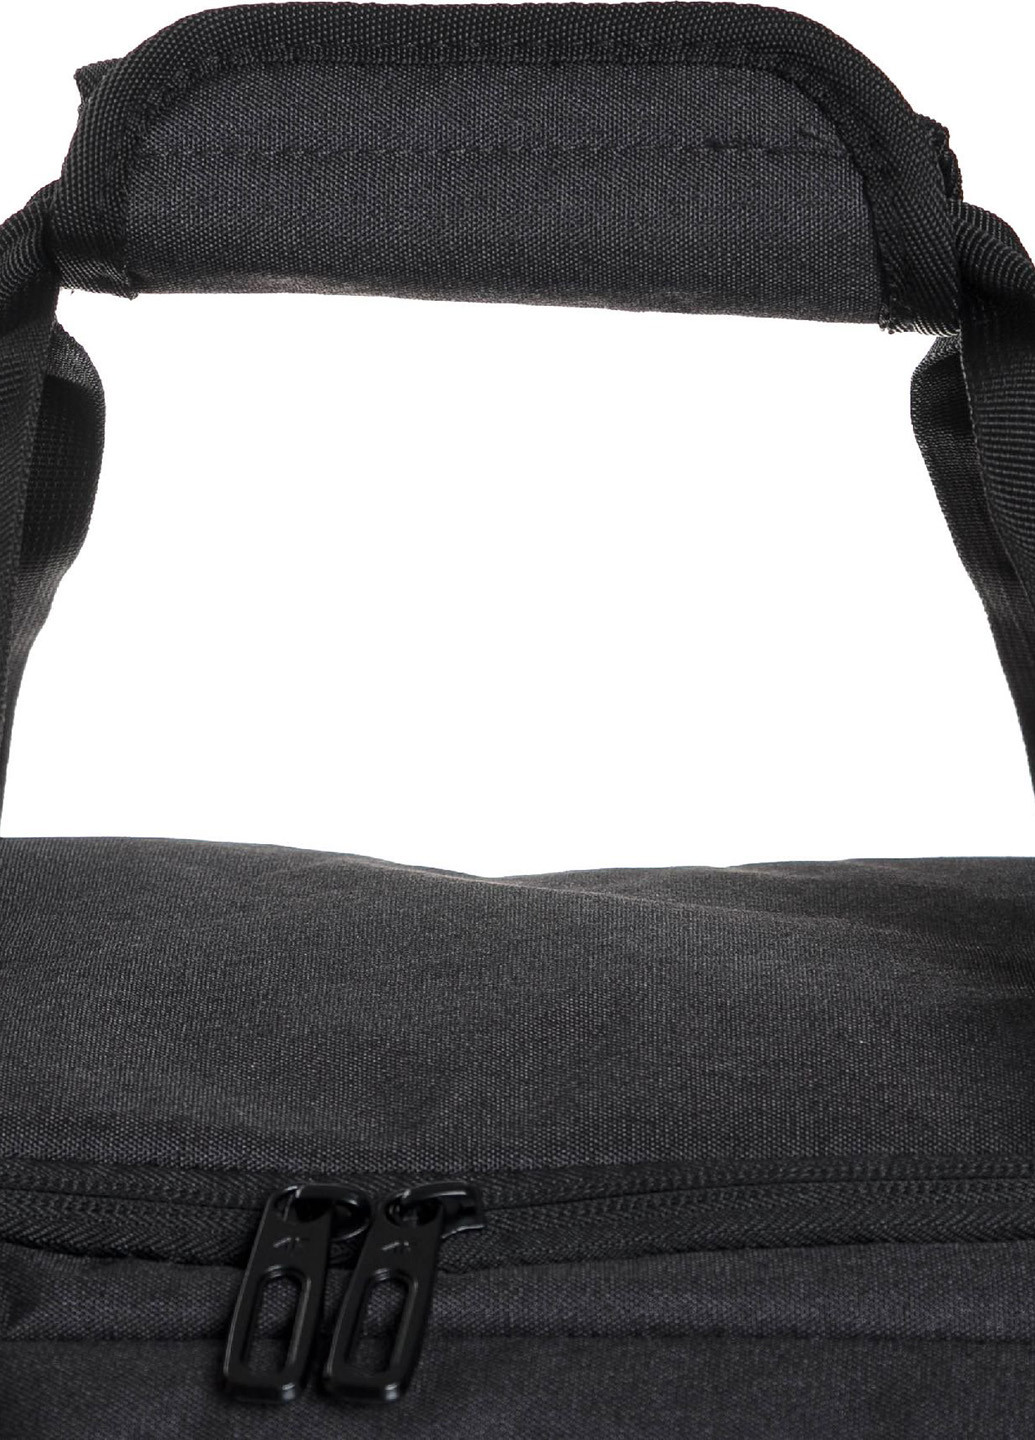 Сумка 4F сумка-корзина логотип чёрная спортивная